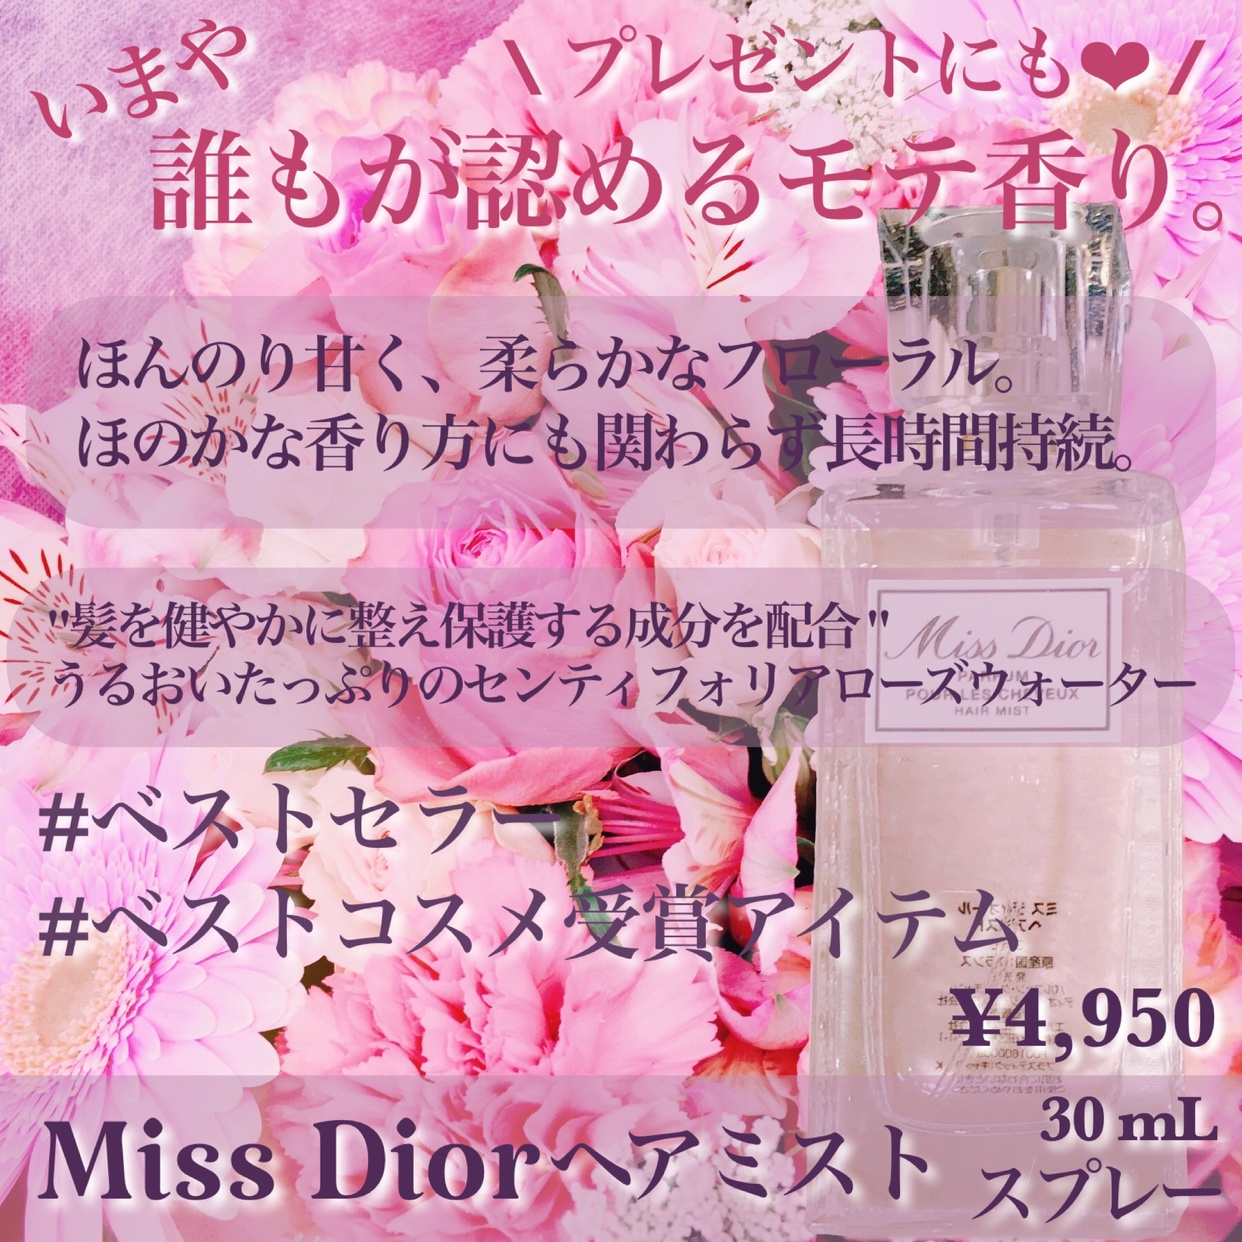 Dior(ディオール)ミス ディオール ヘアミストを使ったsatomiさんのクチコミ画像2